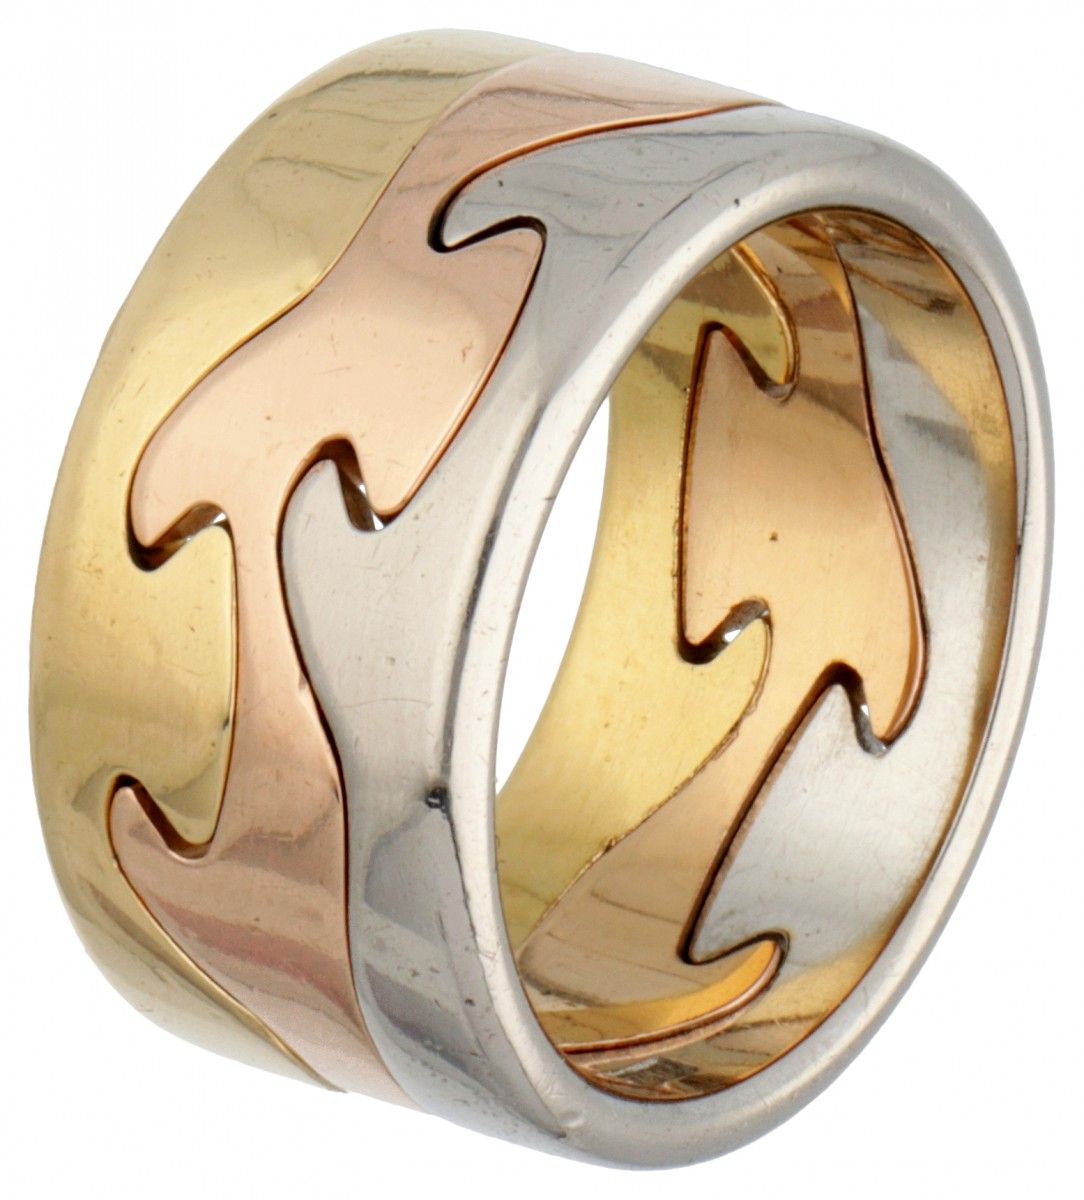 Nina Koppel for Georg Jensen 18K. Tricolor gold 3-piece 'Fusion' ring. Punzierun&hellip;